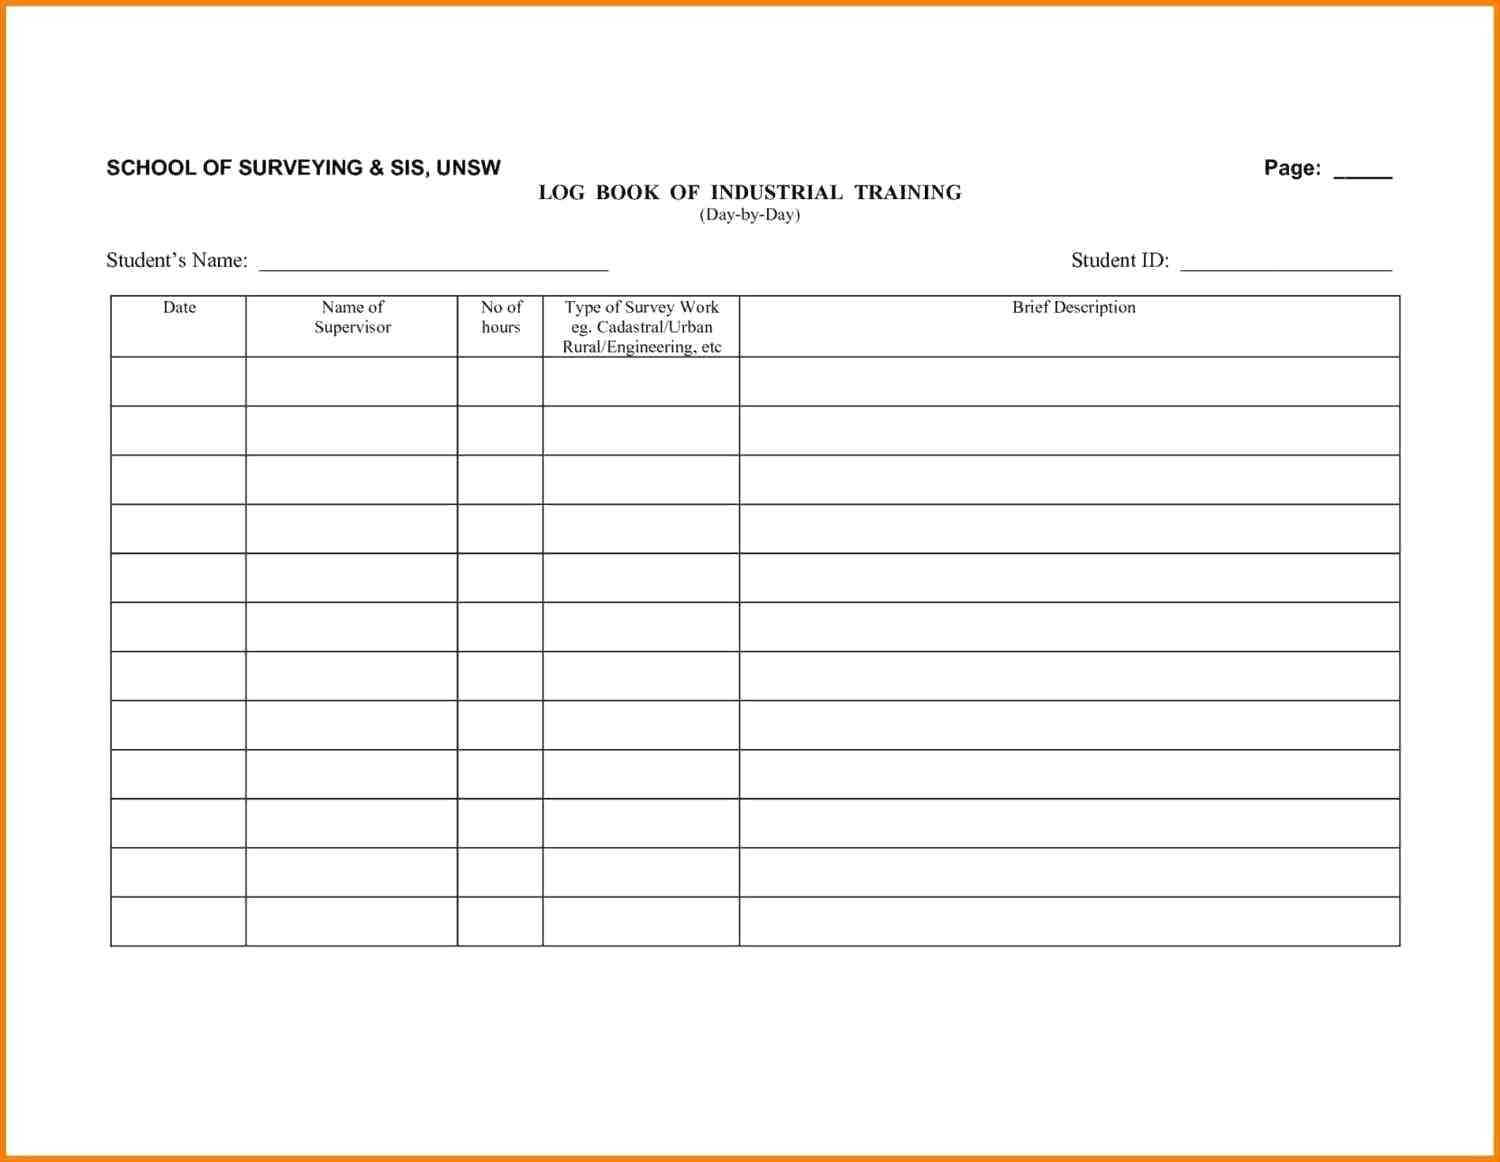 Free Coupon Organizer Spreadsheet Throughout Excel Organizer  Rent.interpretomics.co